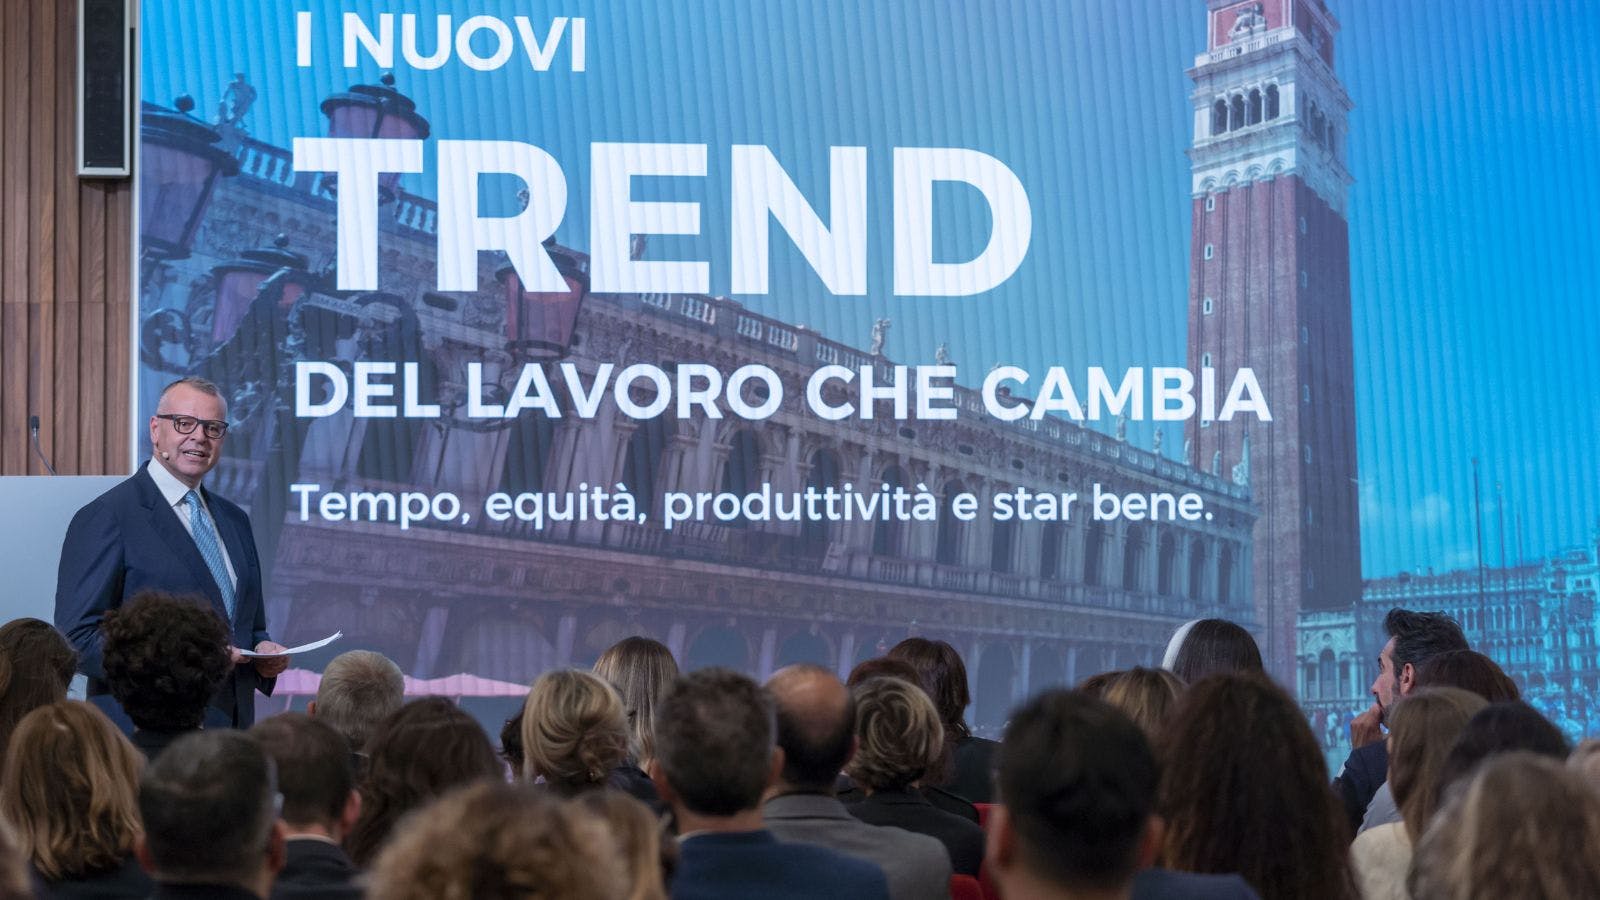 img. 1: "Gianluca Spolverato sul palco di Agenda 2030"